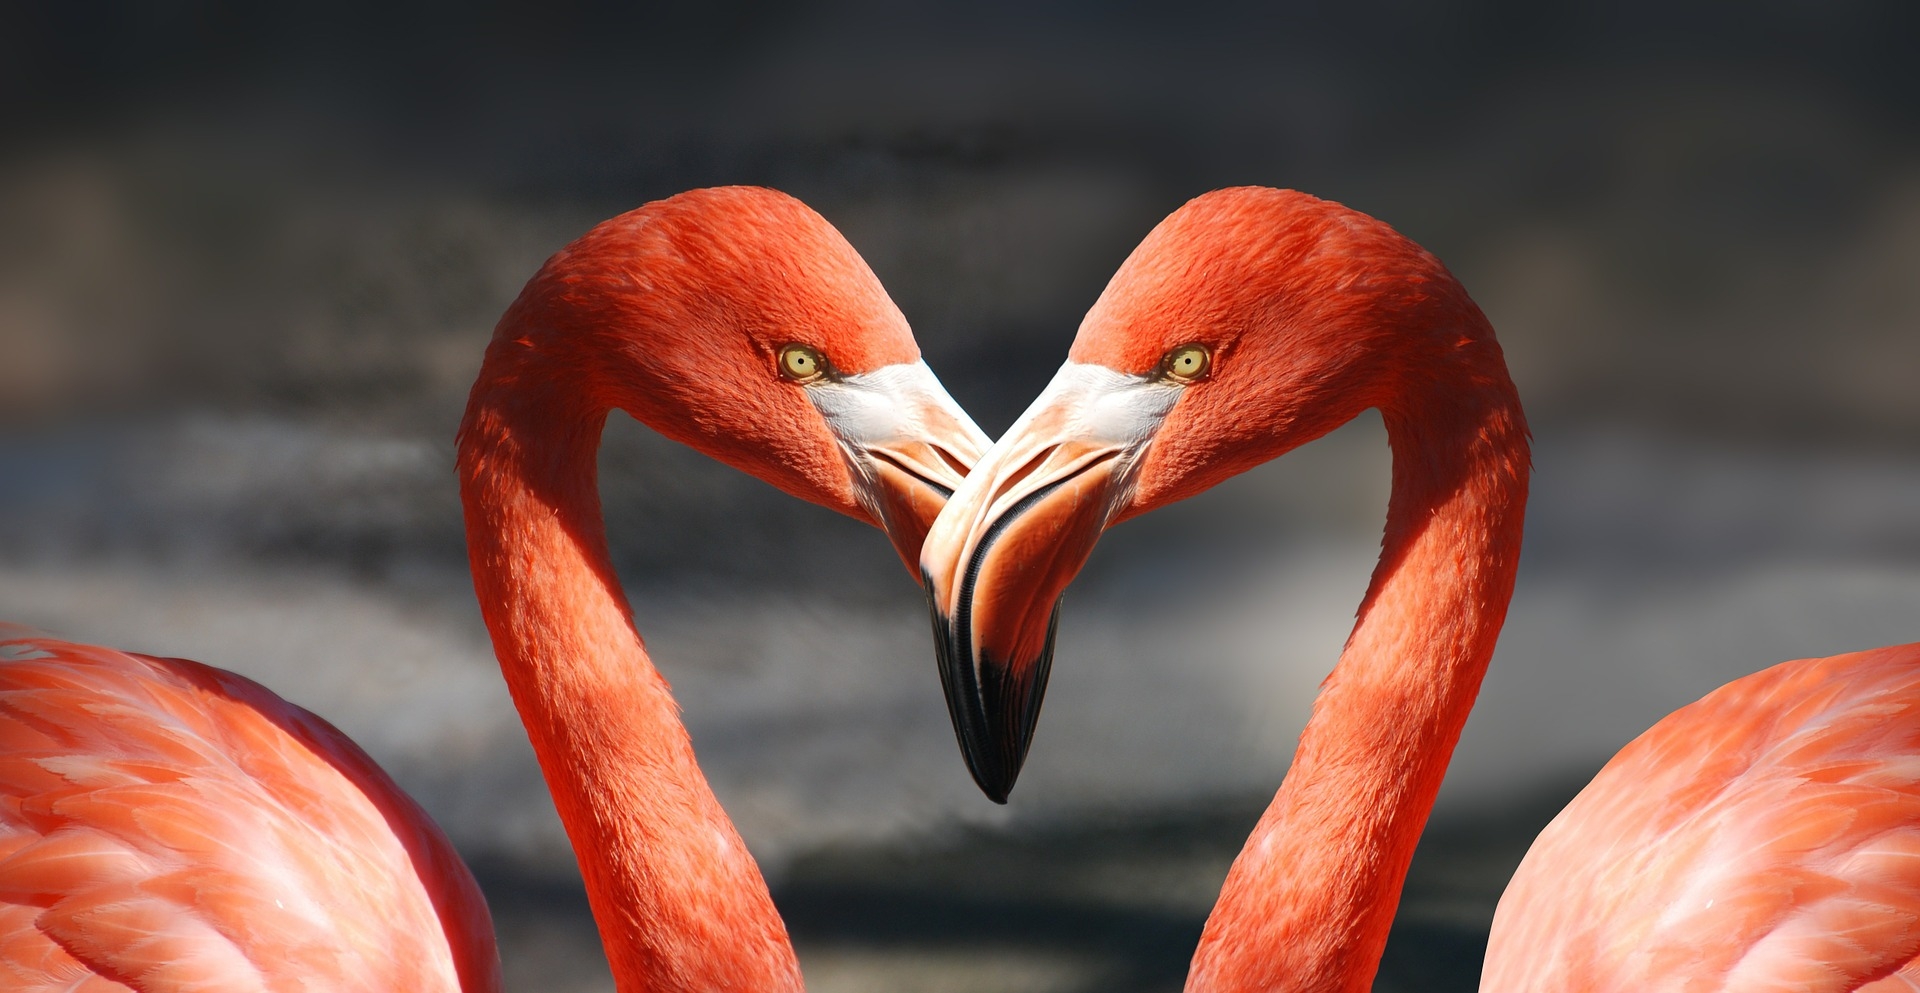 https://pixabay.com/hu/flamingo-valentin-sz%C3%ADv-600205/